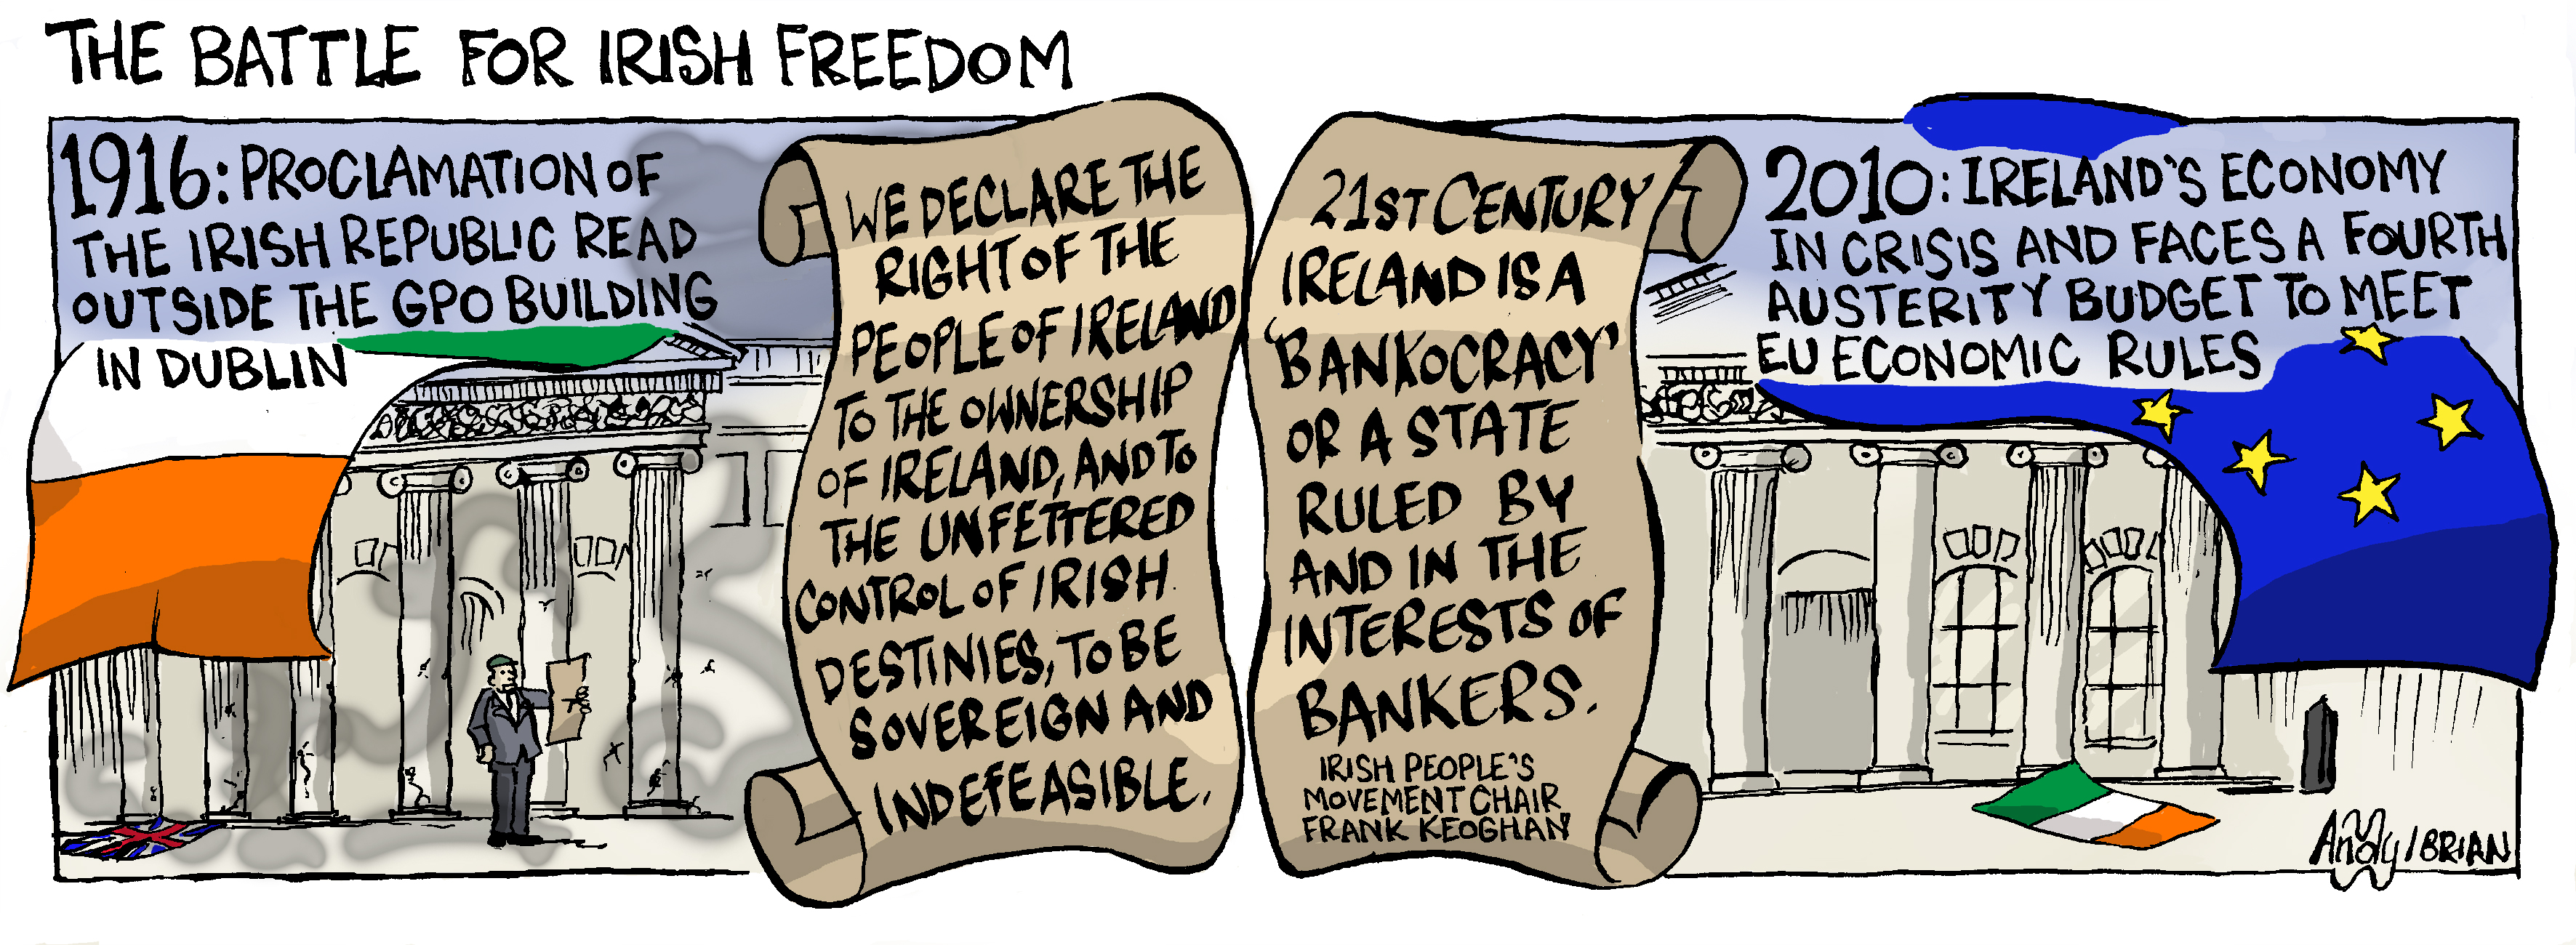 Ireland's independence lost under ECB&IMF dominance